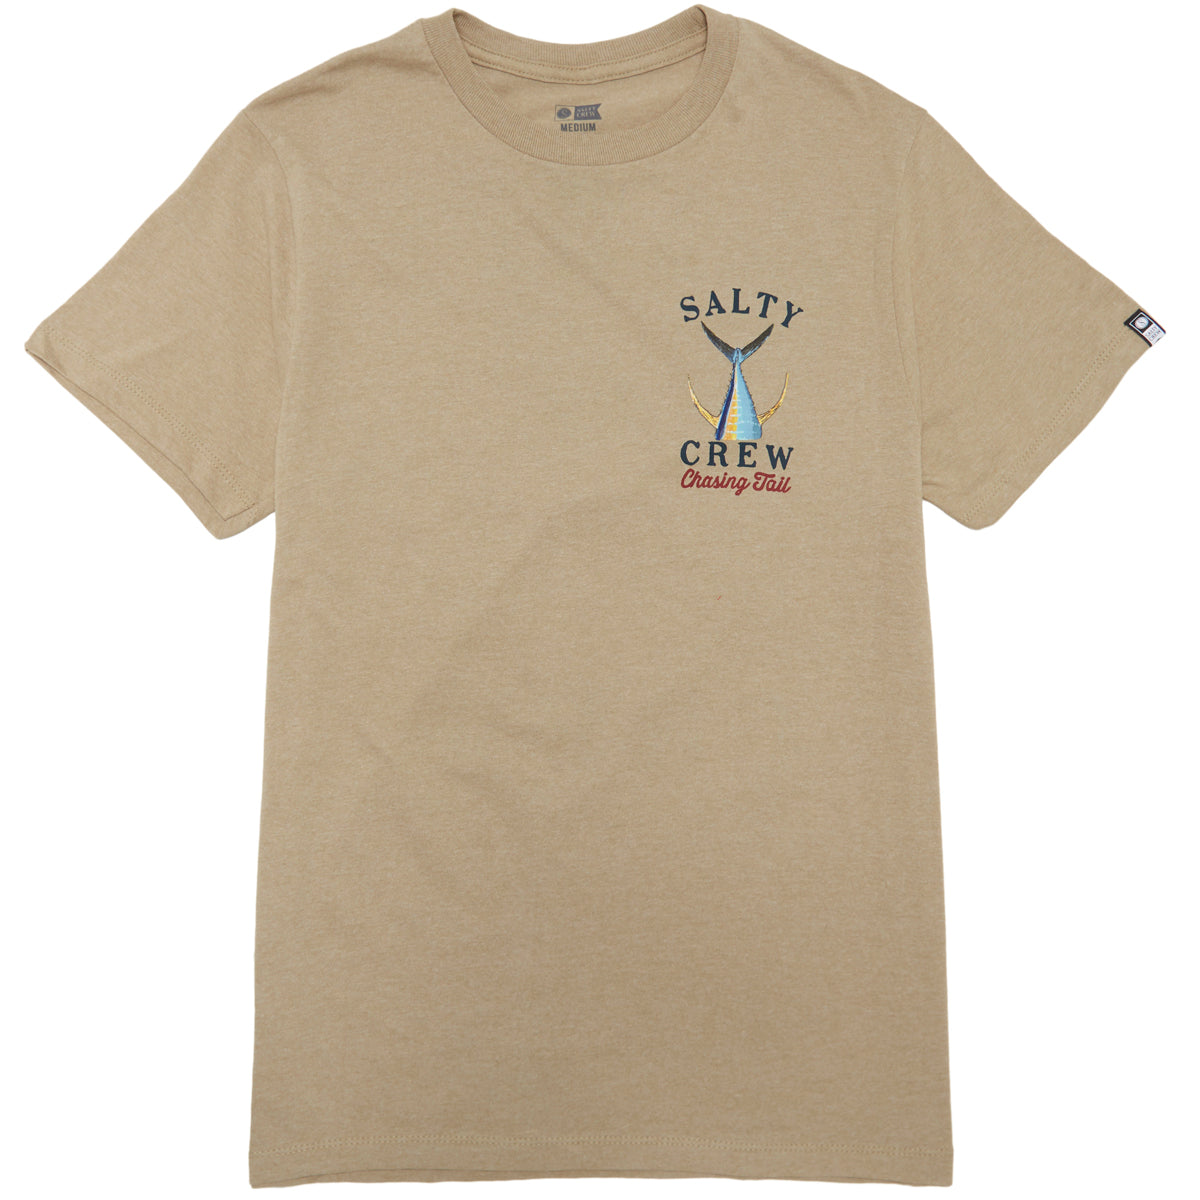 Salty Crew Tailed T-Shirt - Khaki Heather image 2